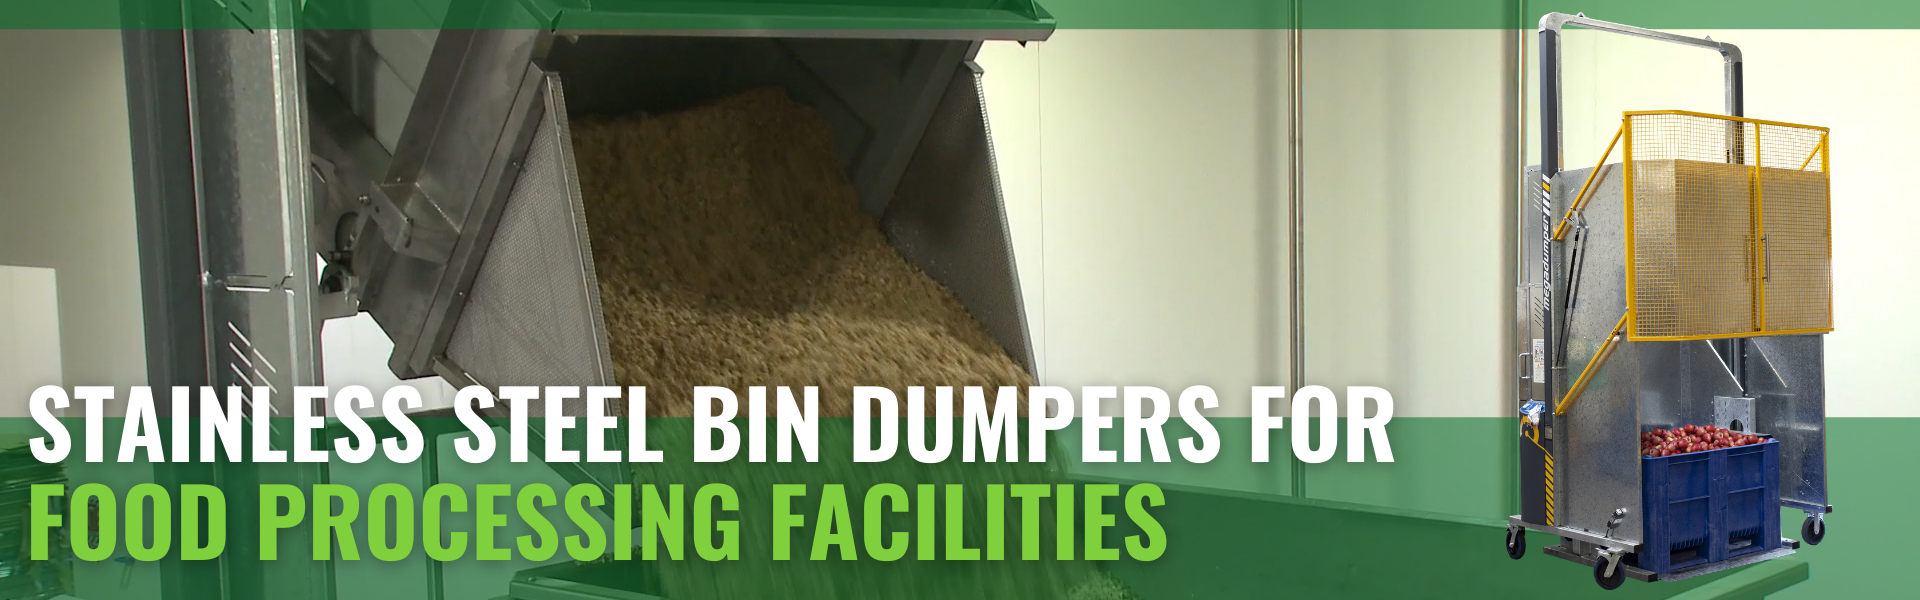  Bin Dumpers in the Food Processing Industry